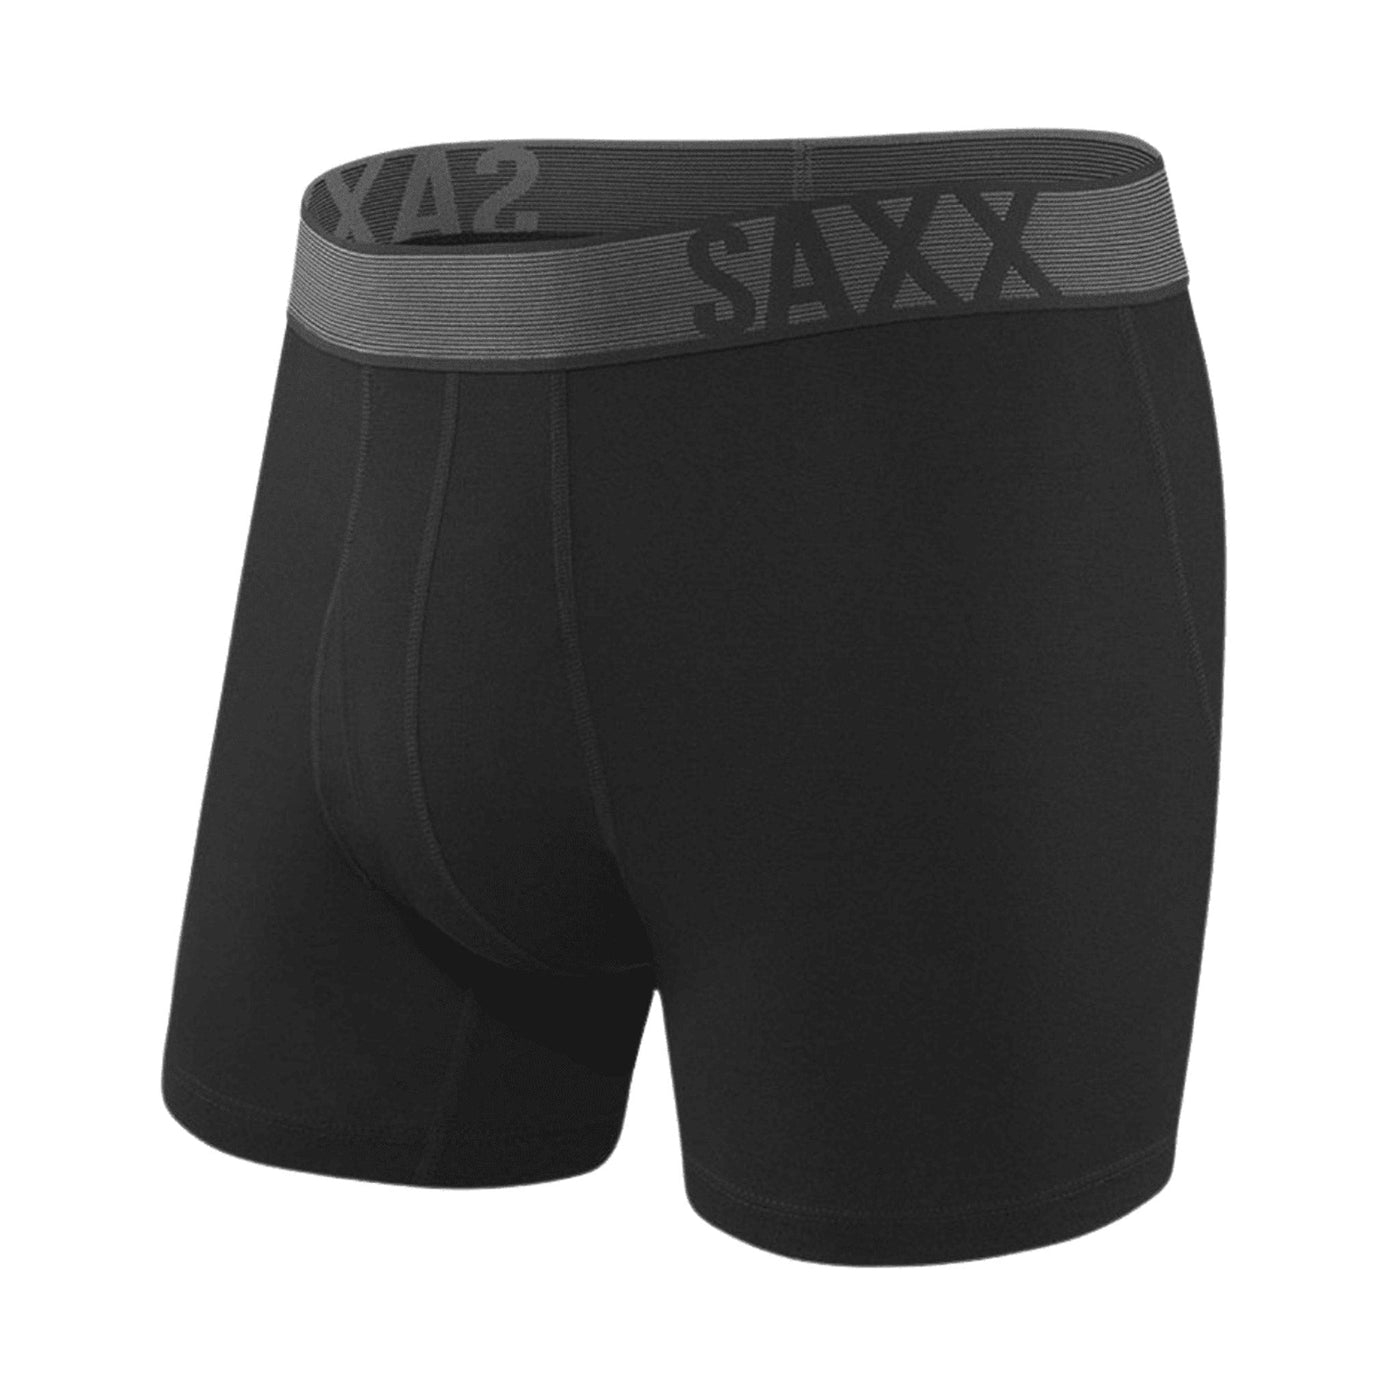 Saxx Blacksheep 2 Boxers - Black